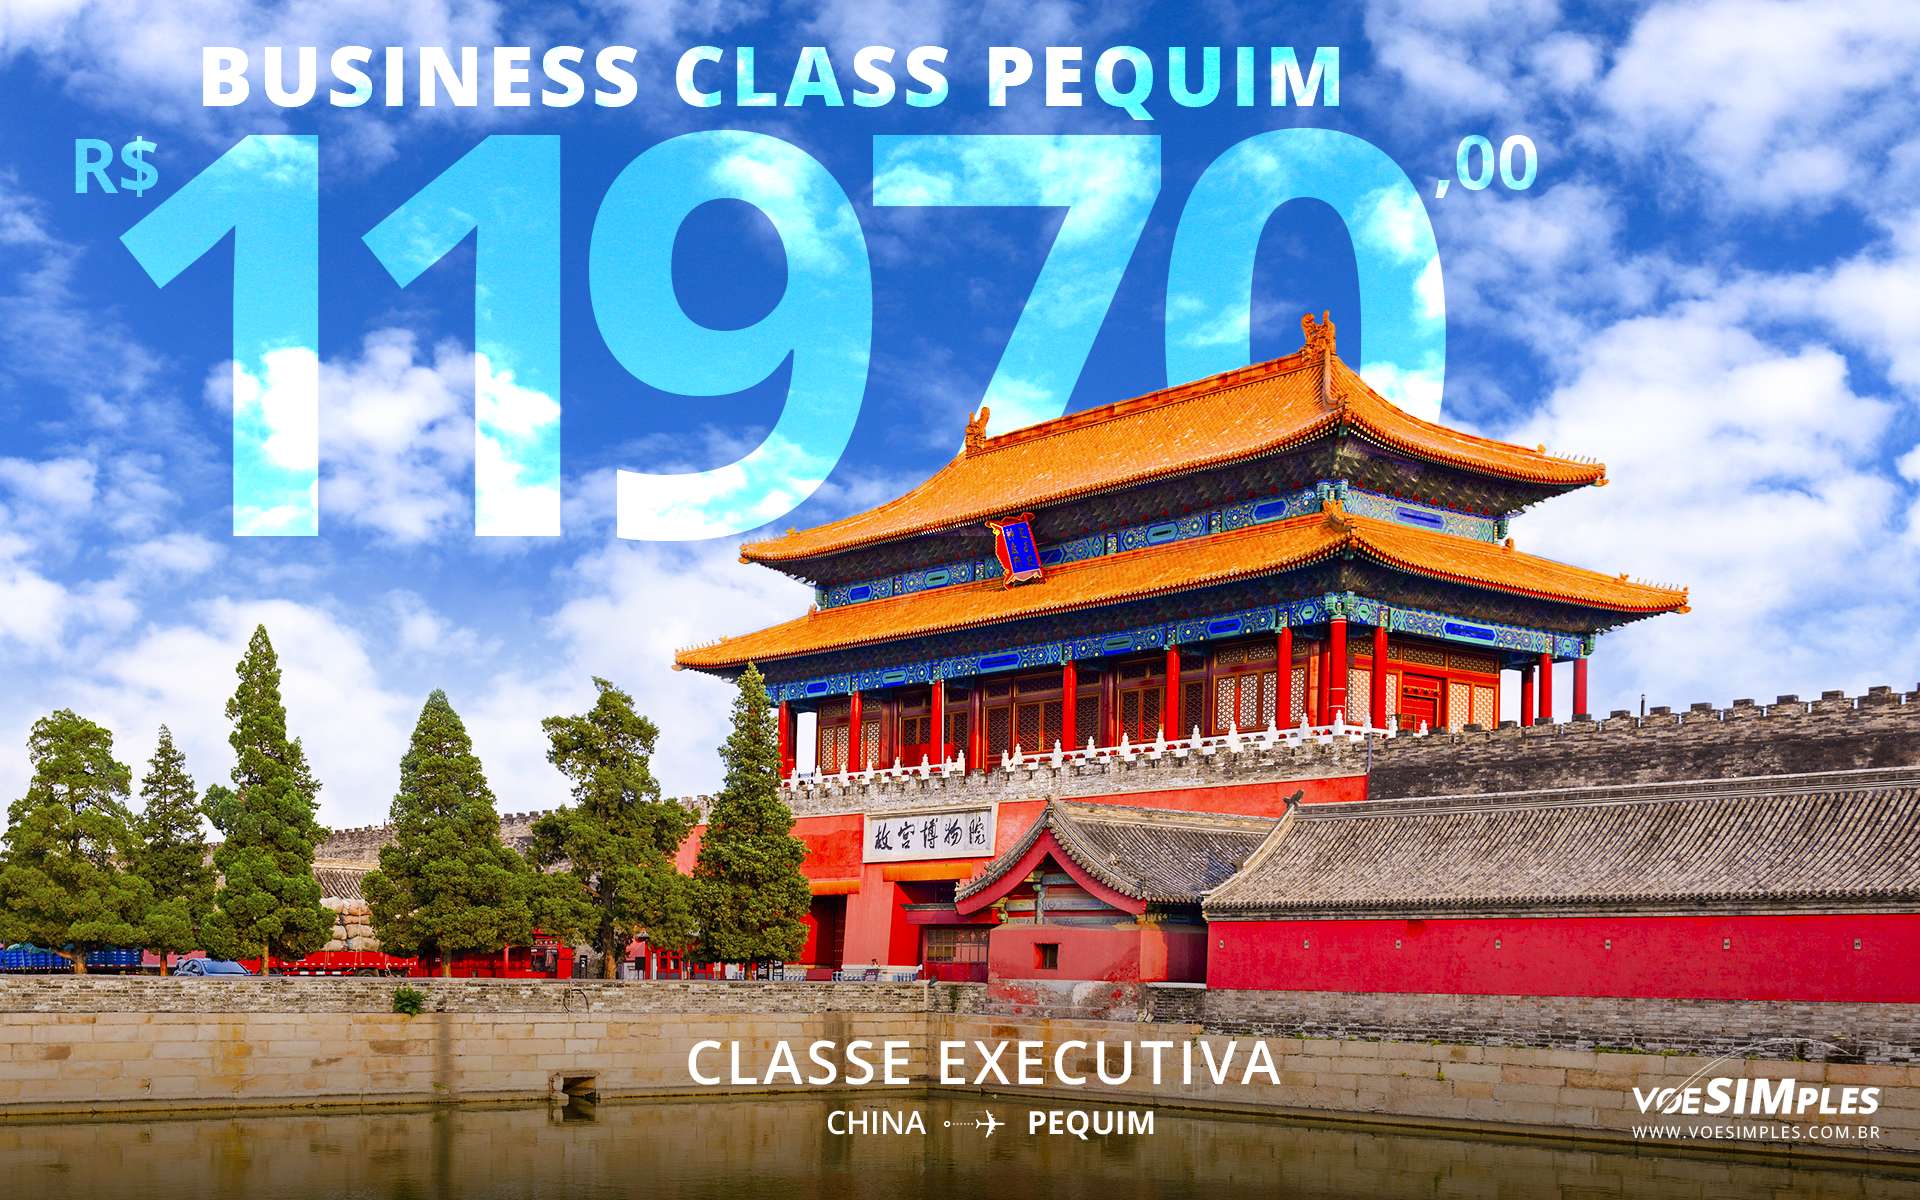 Passagem aérea Business Class Pequim